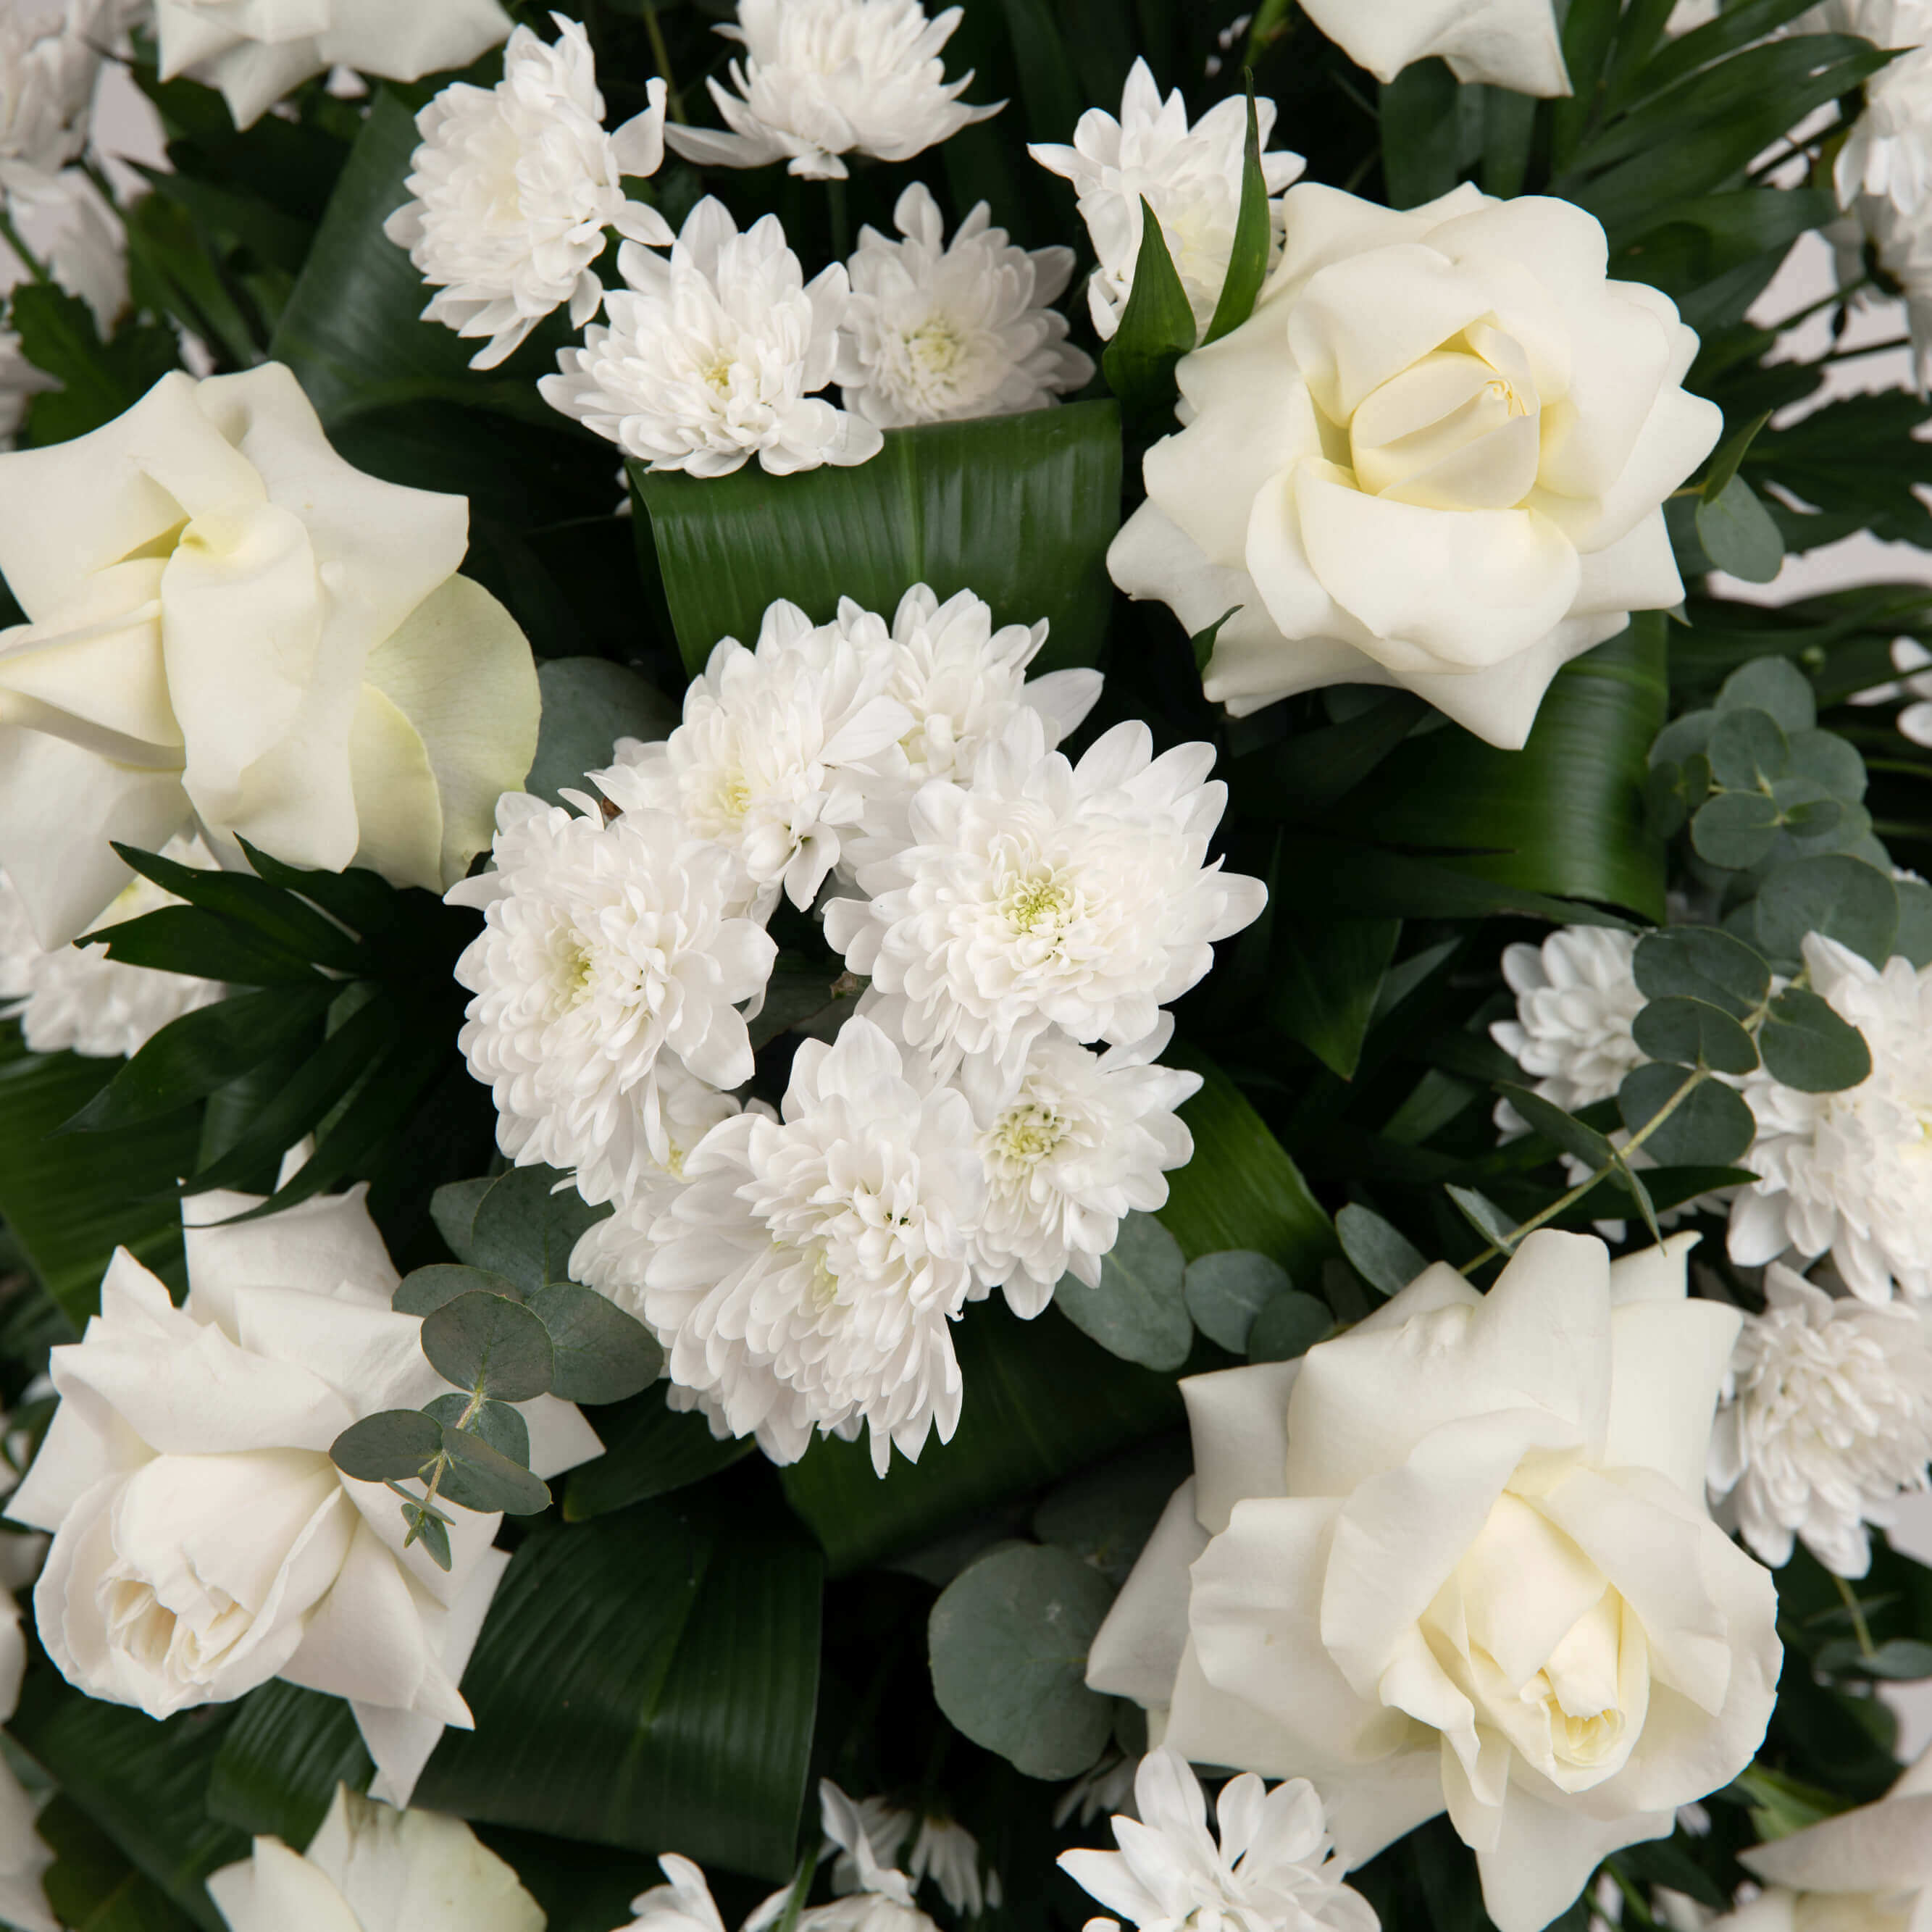 Jerba cu trandafiri albi si crizanteme